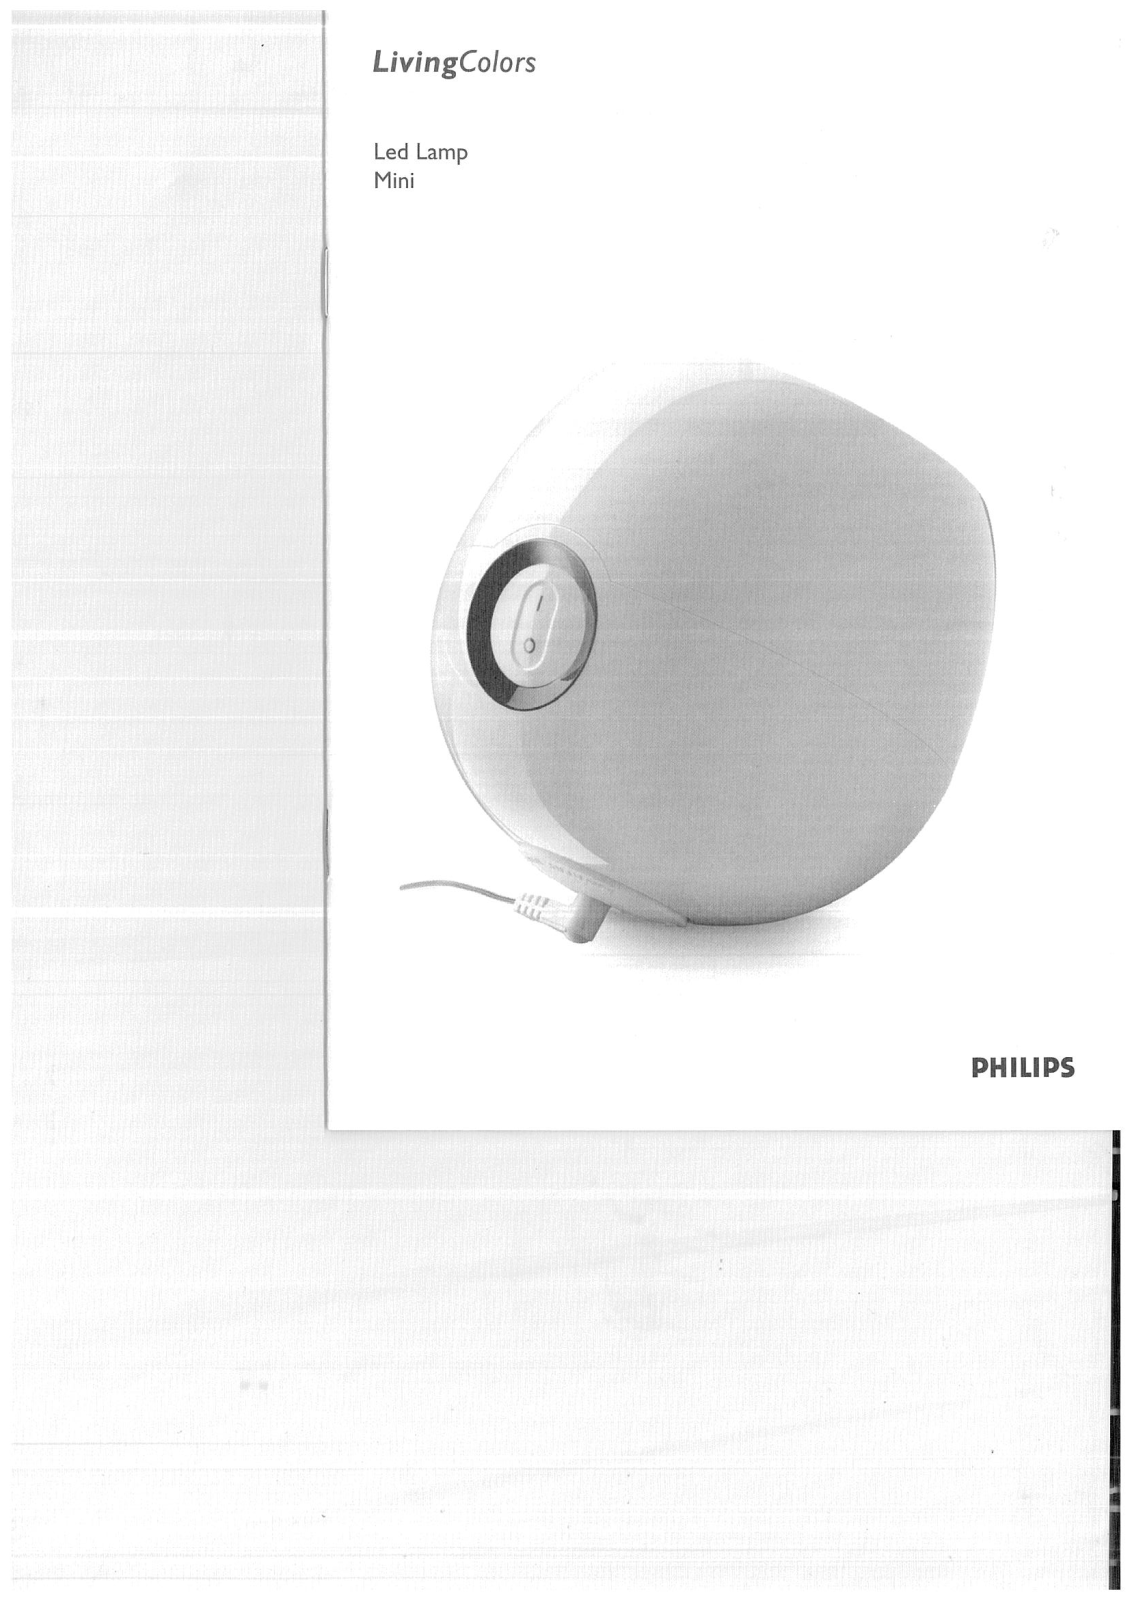 Philips LivingColors Led Lamp Mini User manual